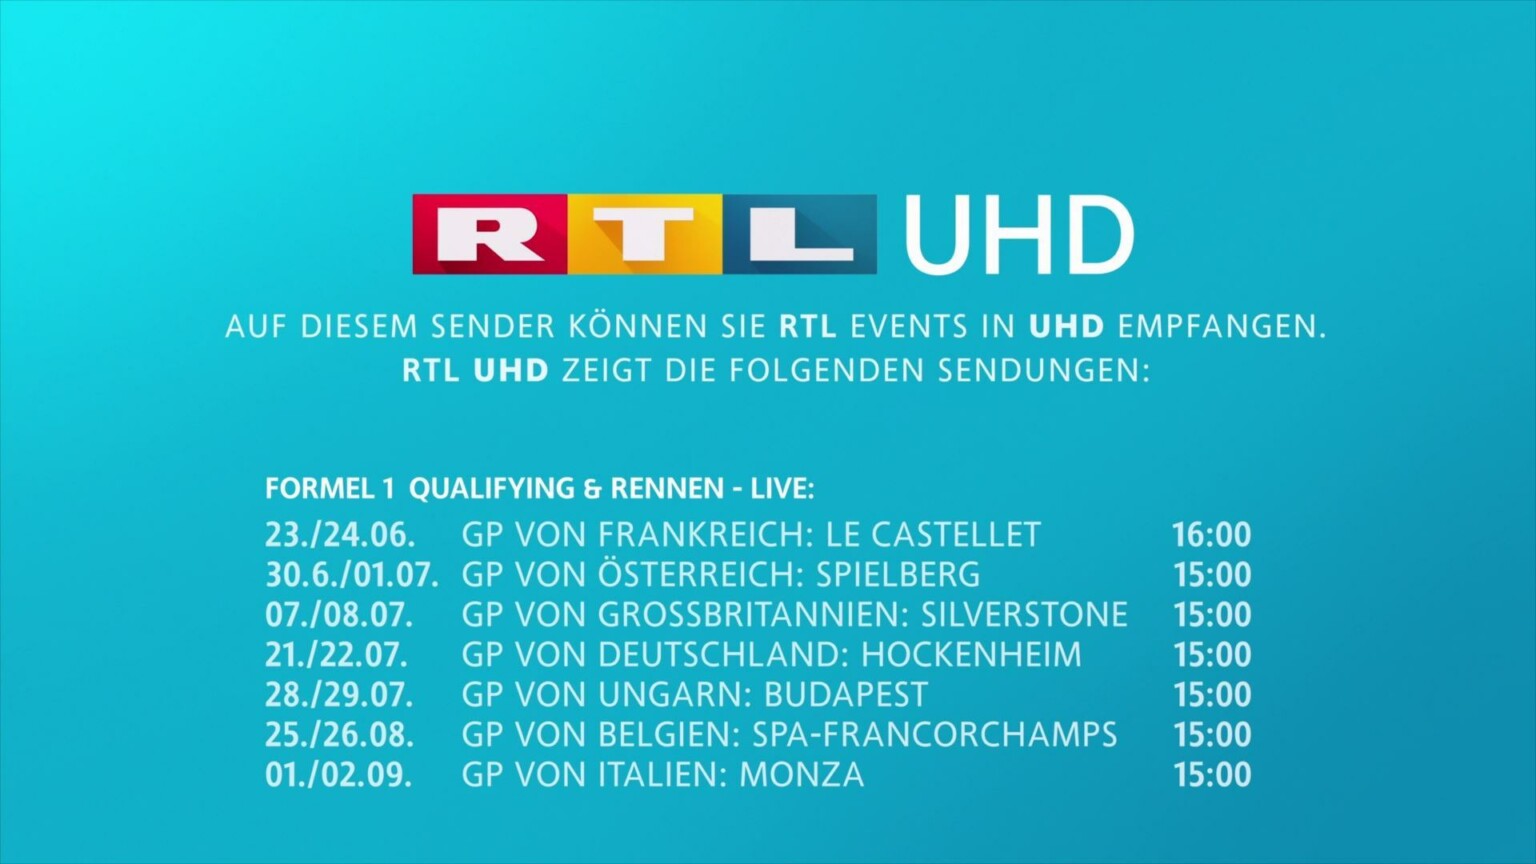 RTL UHD